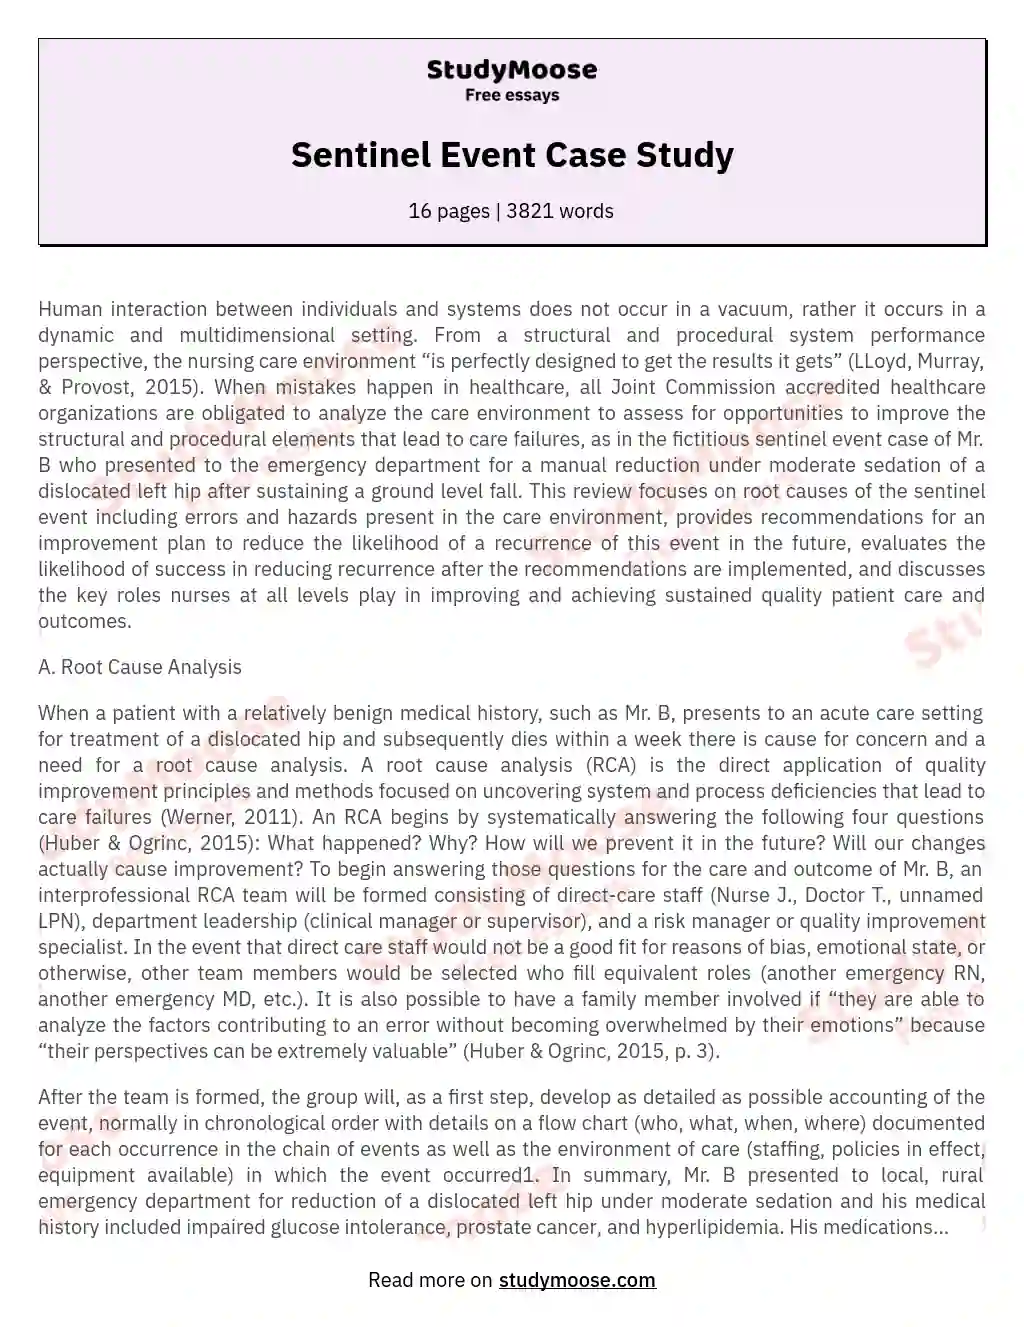 Sentinel Event Case Study essay